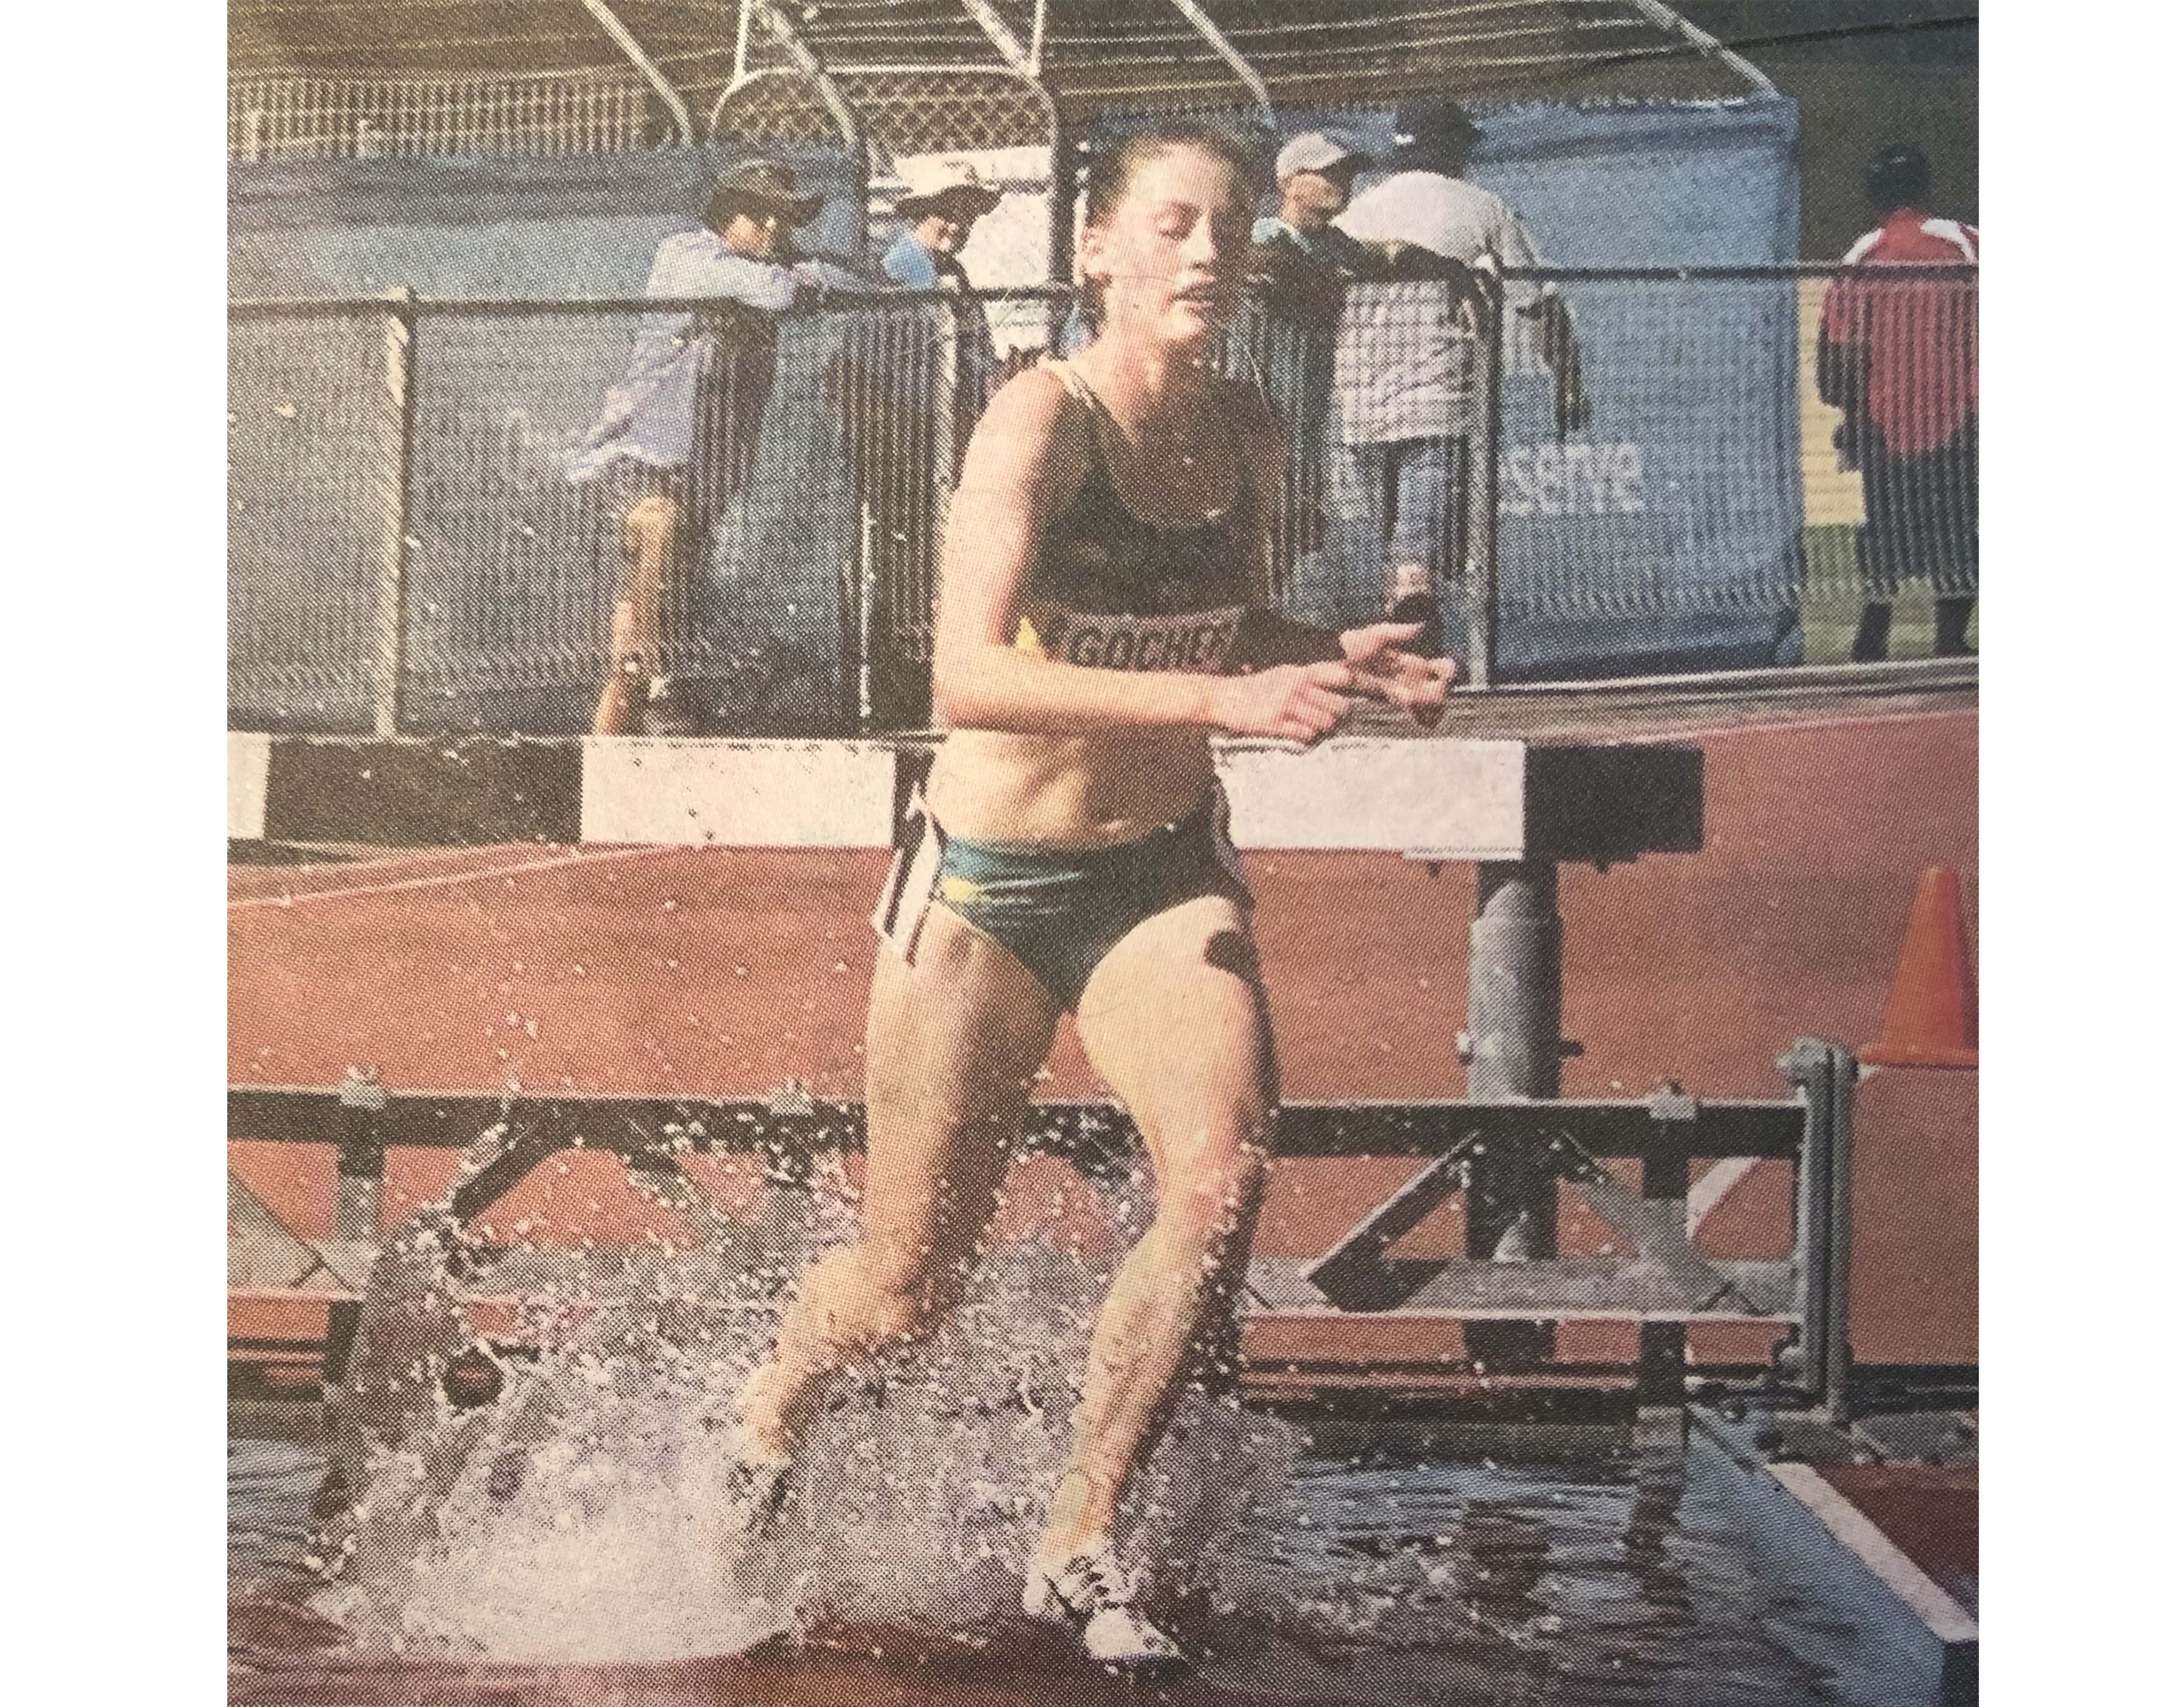 Sophie Gocher representing Australia in steeplechase at 2019 Oceania Championships copyright TWT 31 Jul 2019